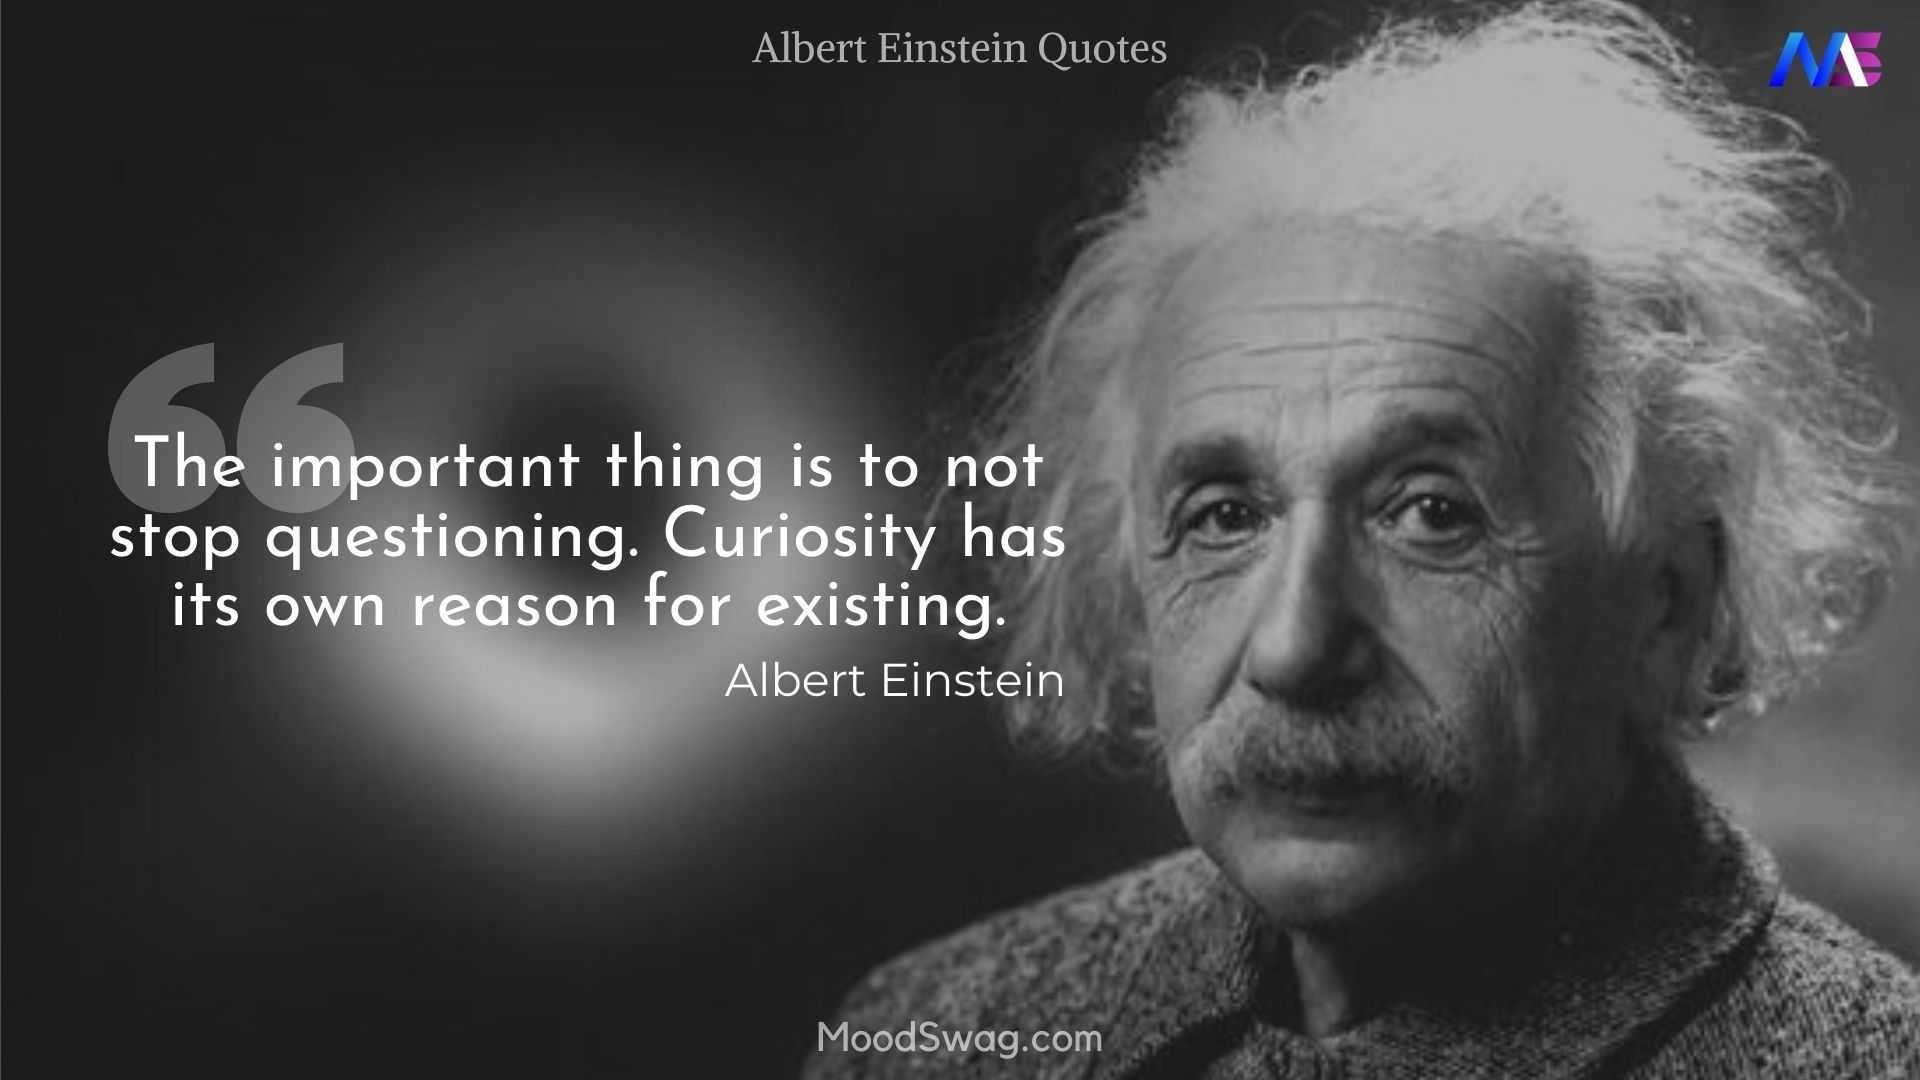 Most Inspiring and Insightful Albert Einstein Quotes - Moodswag